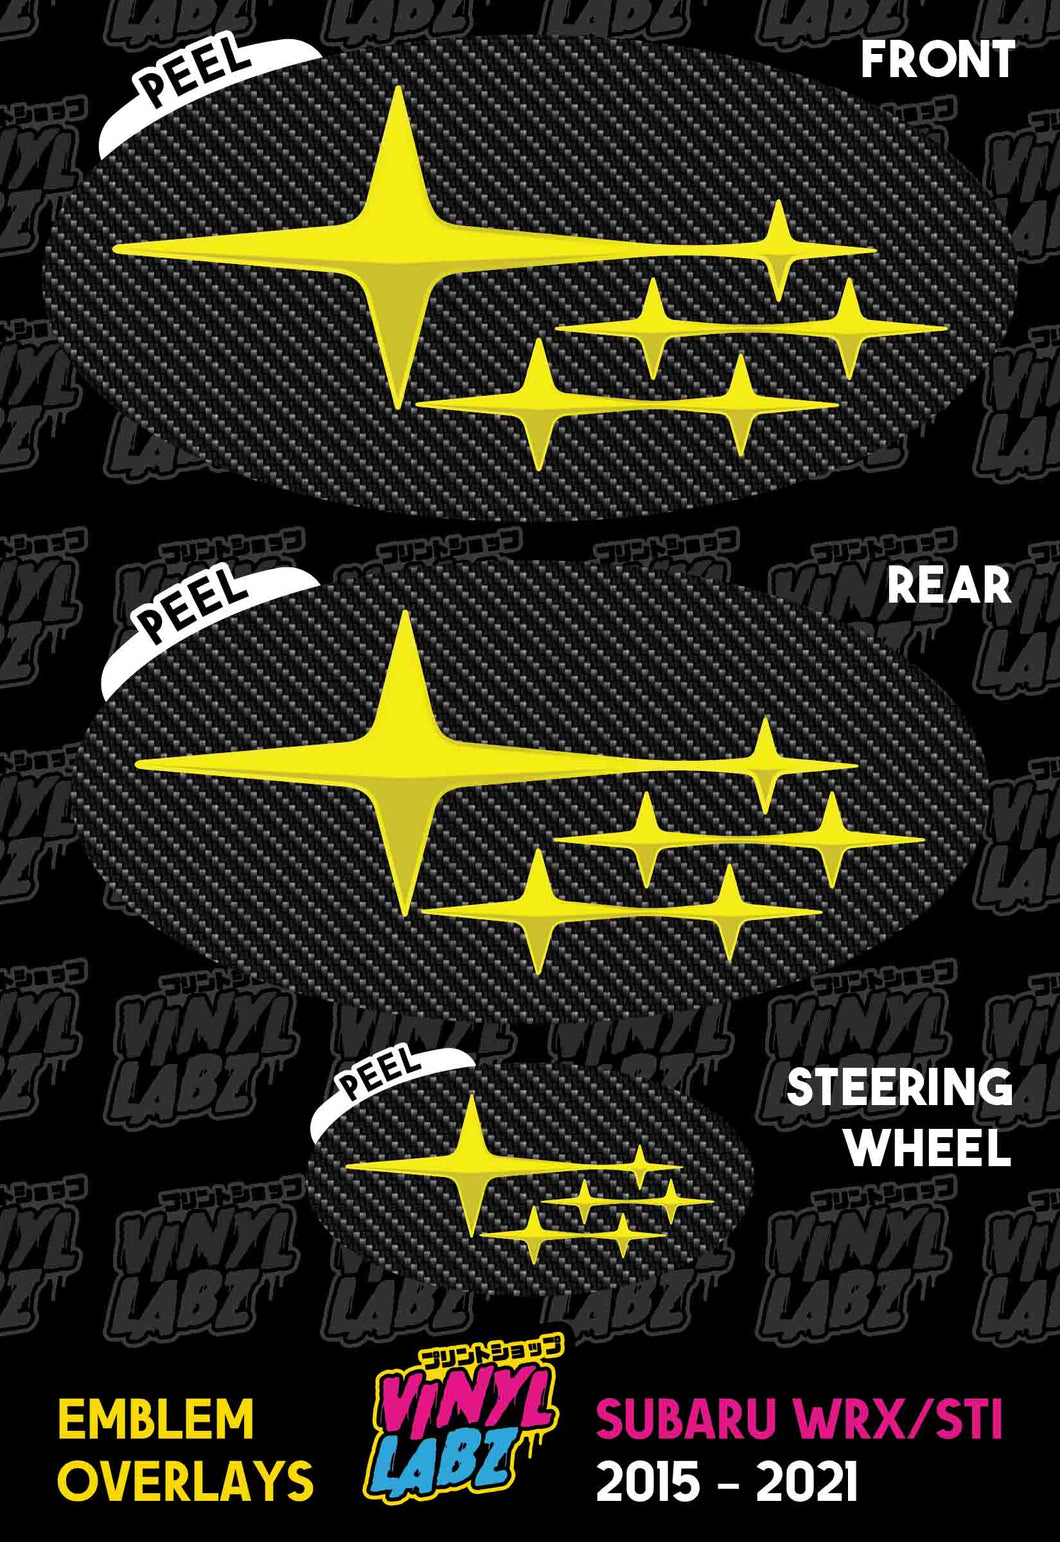 Subaru Vinyl Emblem Overlay (Carbon Fiber and Yellow) | 2015-2021 Subaru WRX/STI